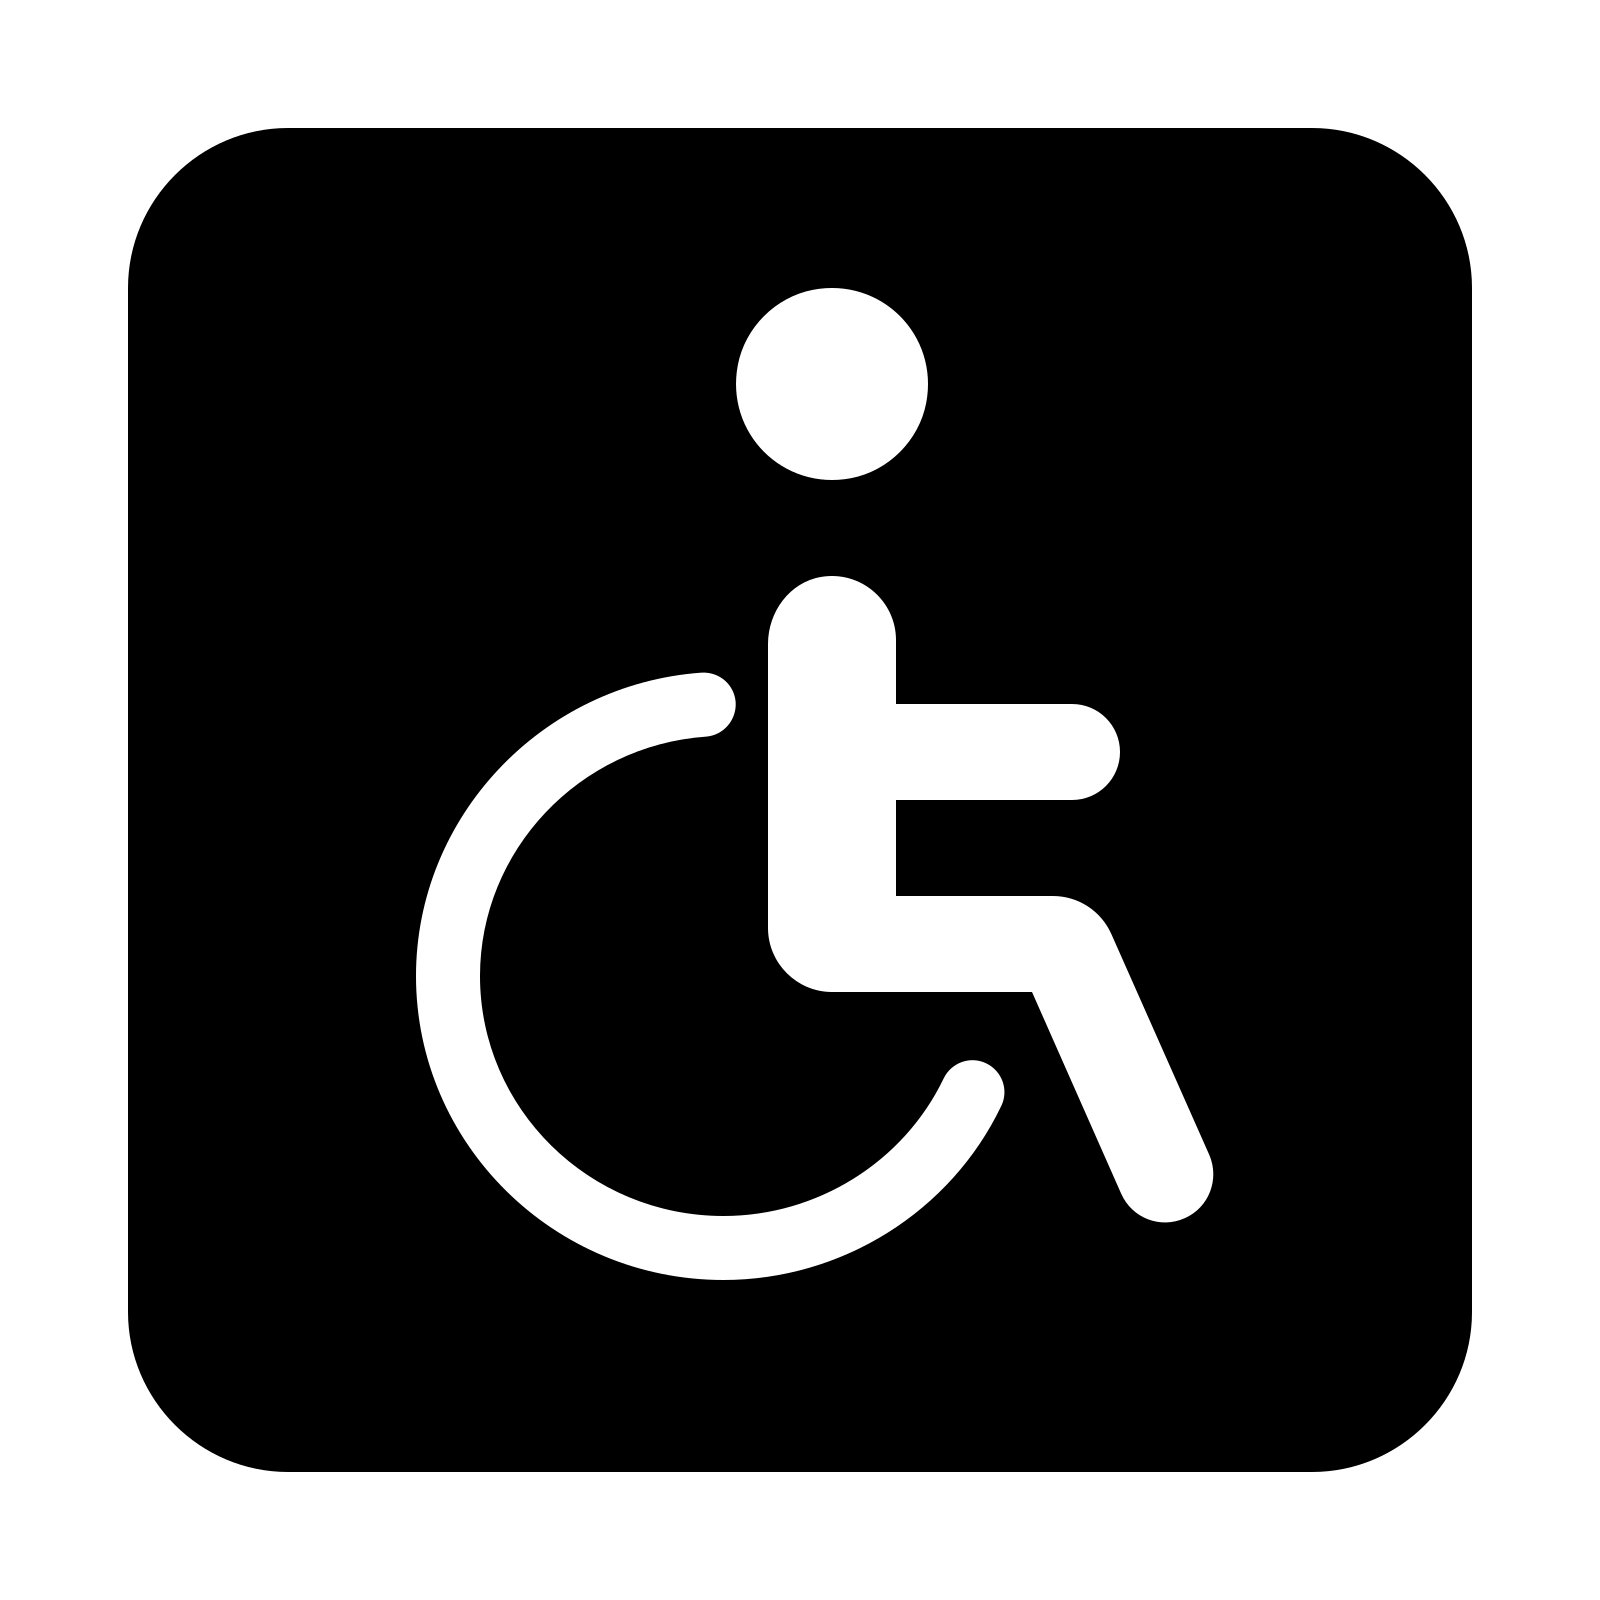 Disabled Handicap Symbol Png Transparent Image Download Size 1600x1600px